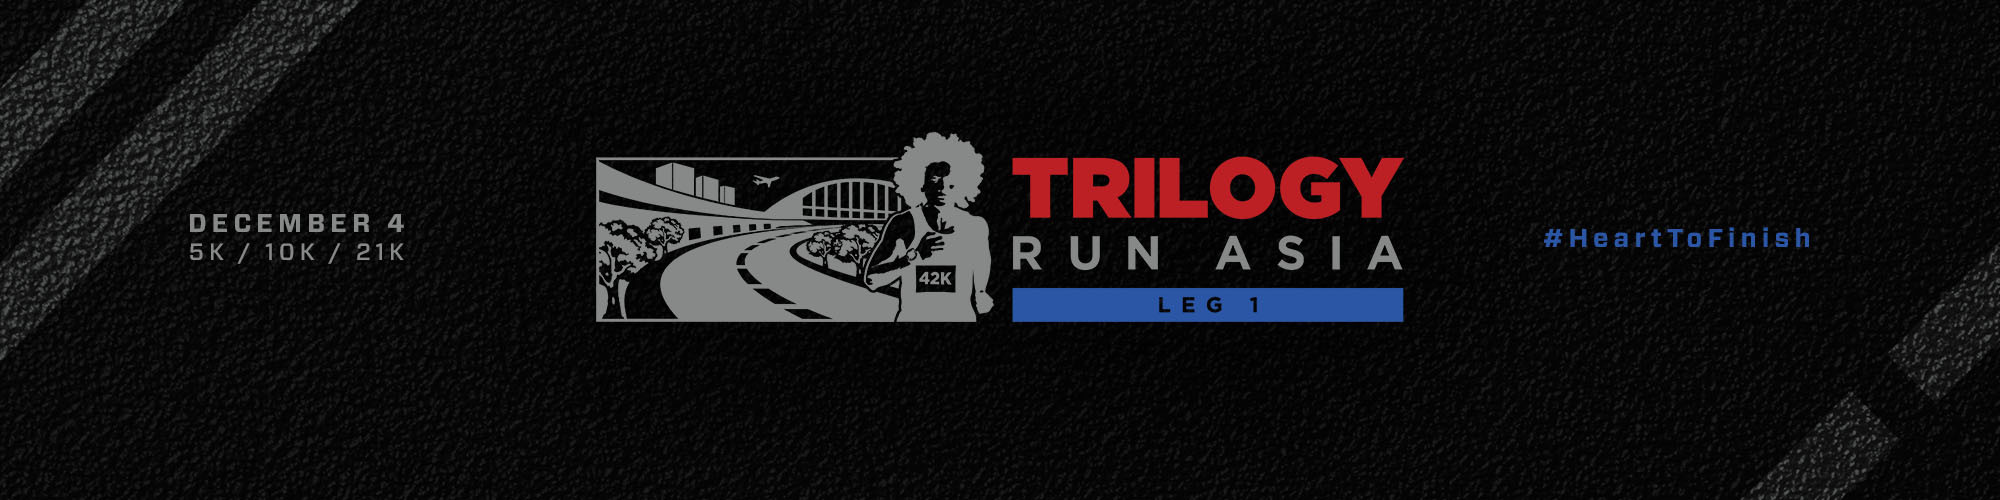 Trilogy Run Asia Leg 1